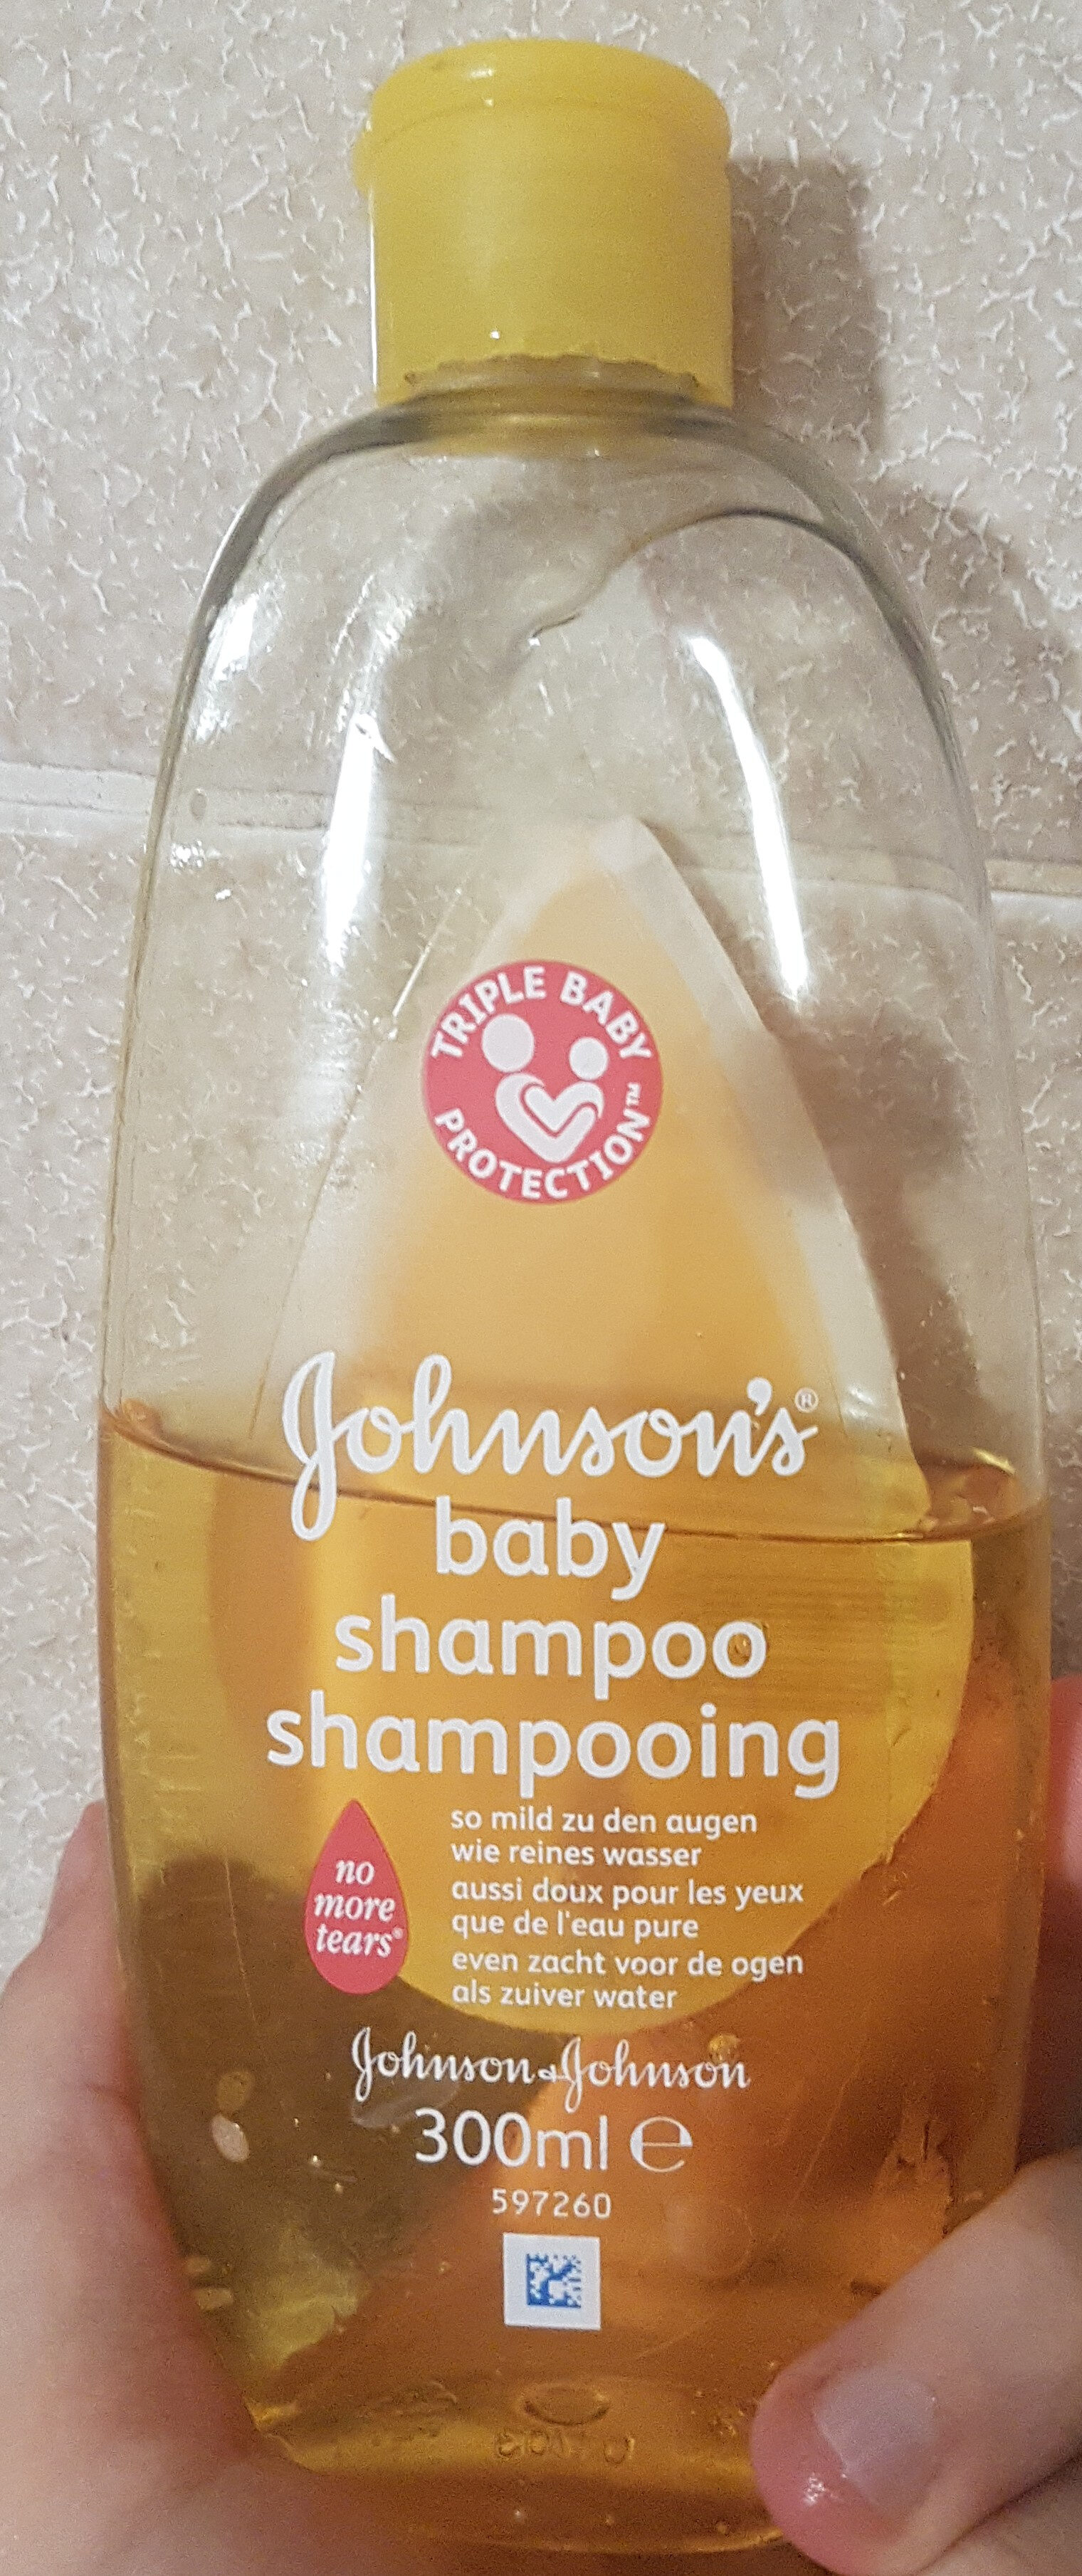 baby shampoo shampooing - Produit - en